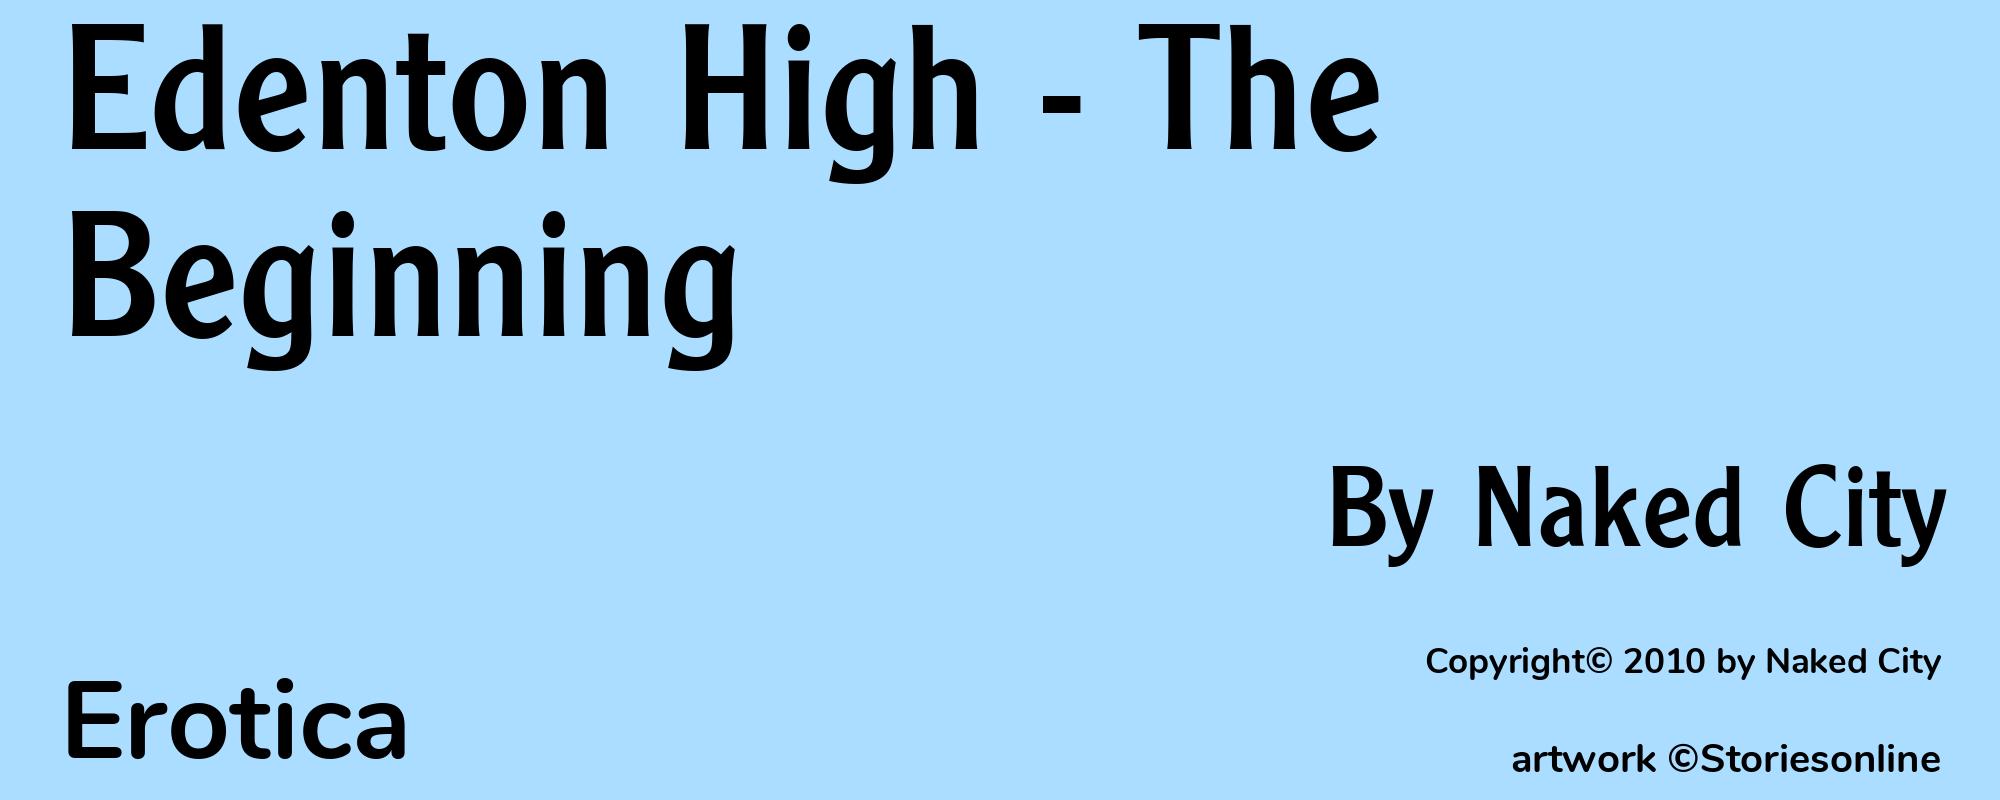 Edenton High - The Beginning - Cover